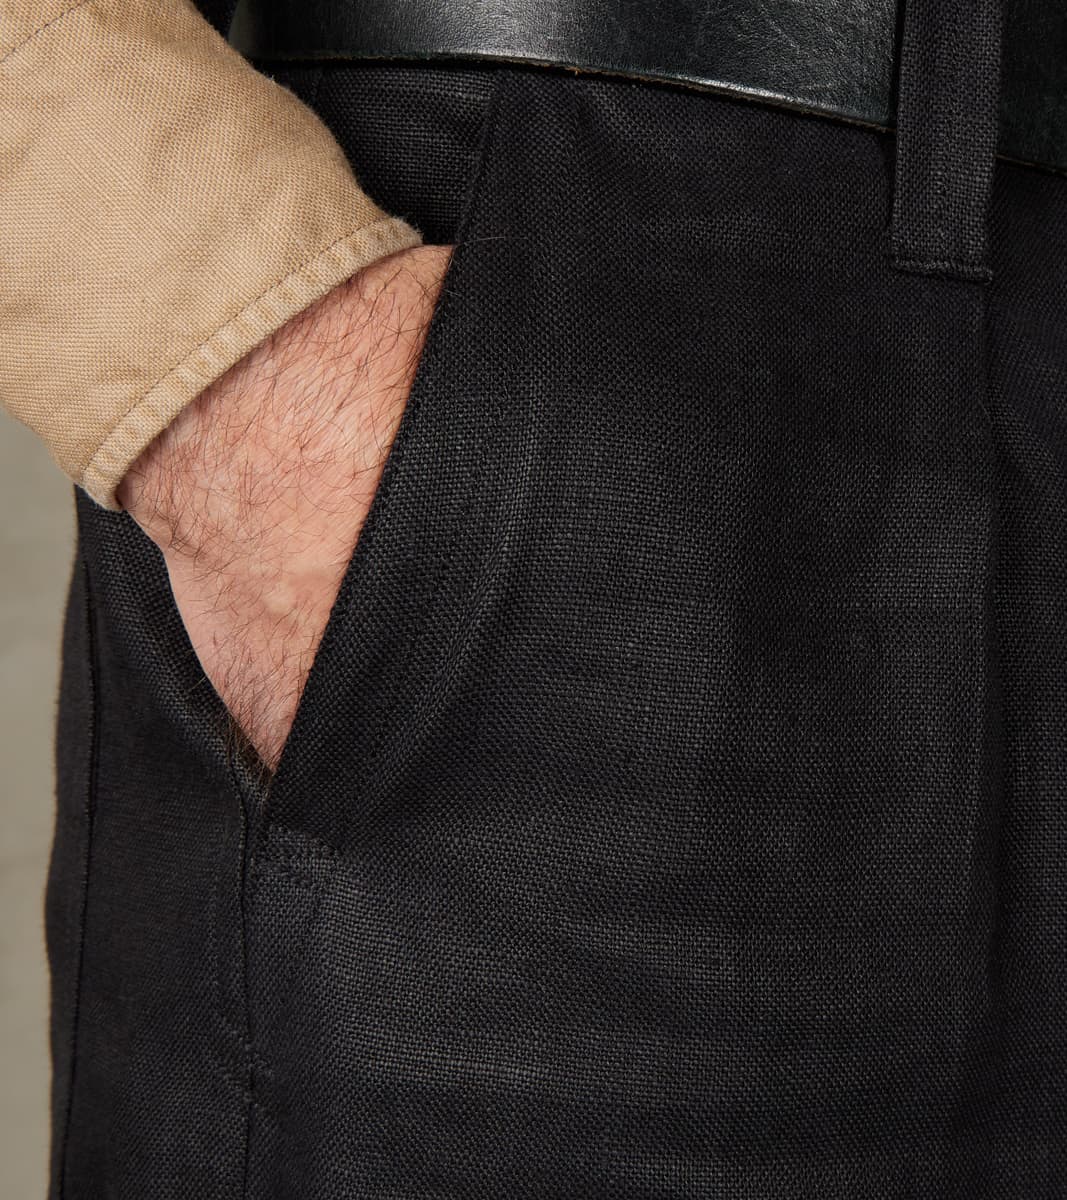 French Work Trousers   Spence Bryson® Black Coal Heavy Irish Linen